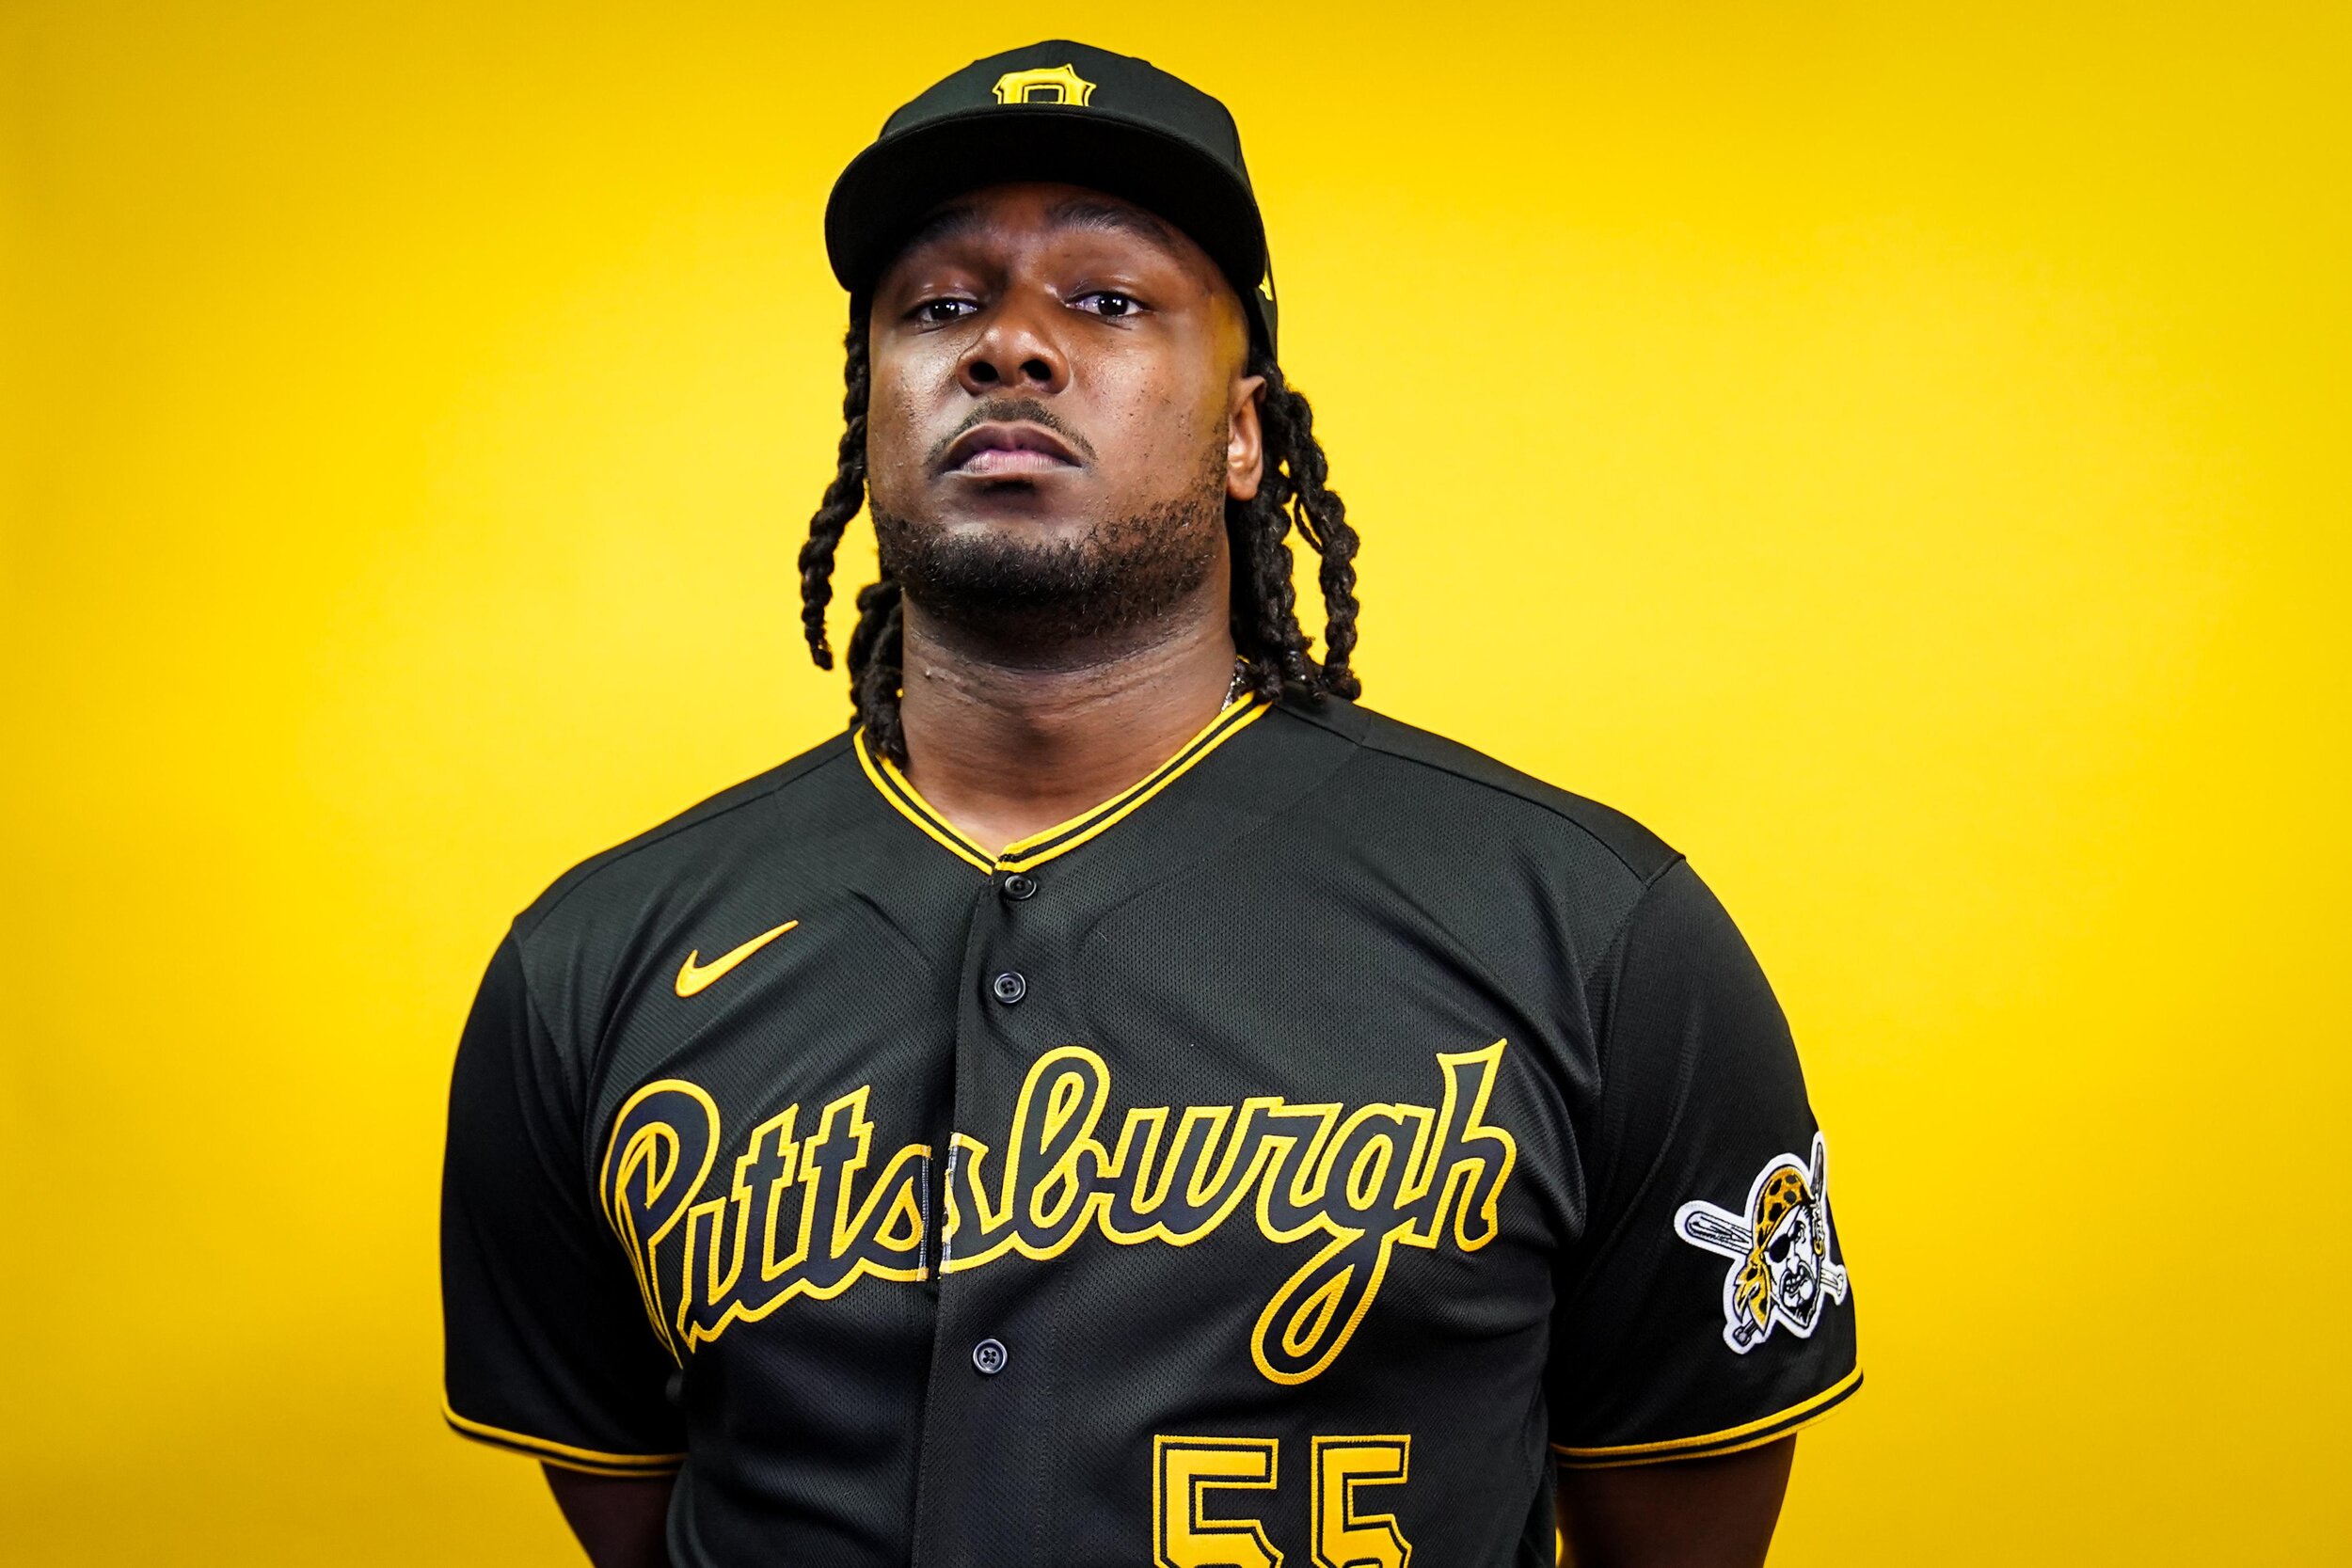 2020/2022 Pittsburgh Pirates Uniform Set - Uniforms - MVP Mods